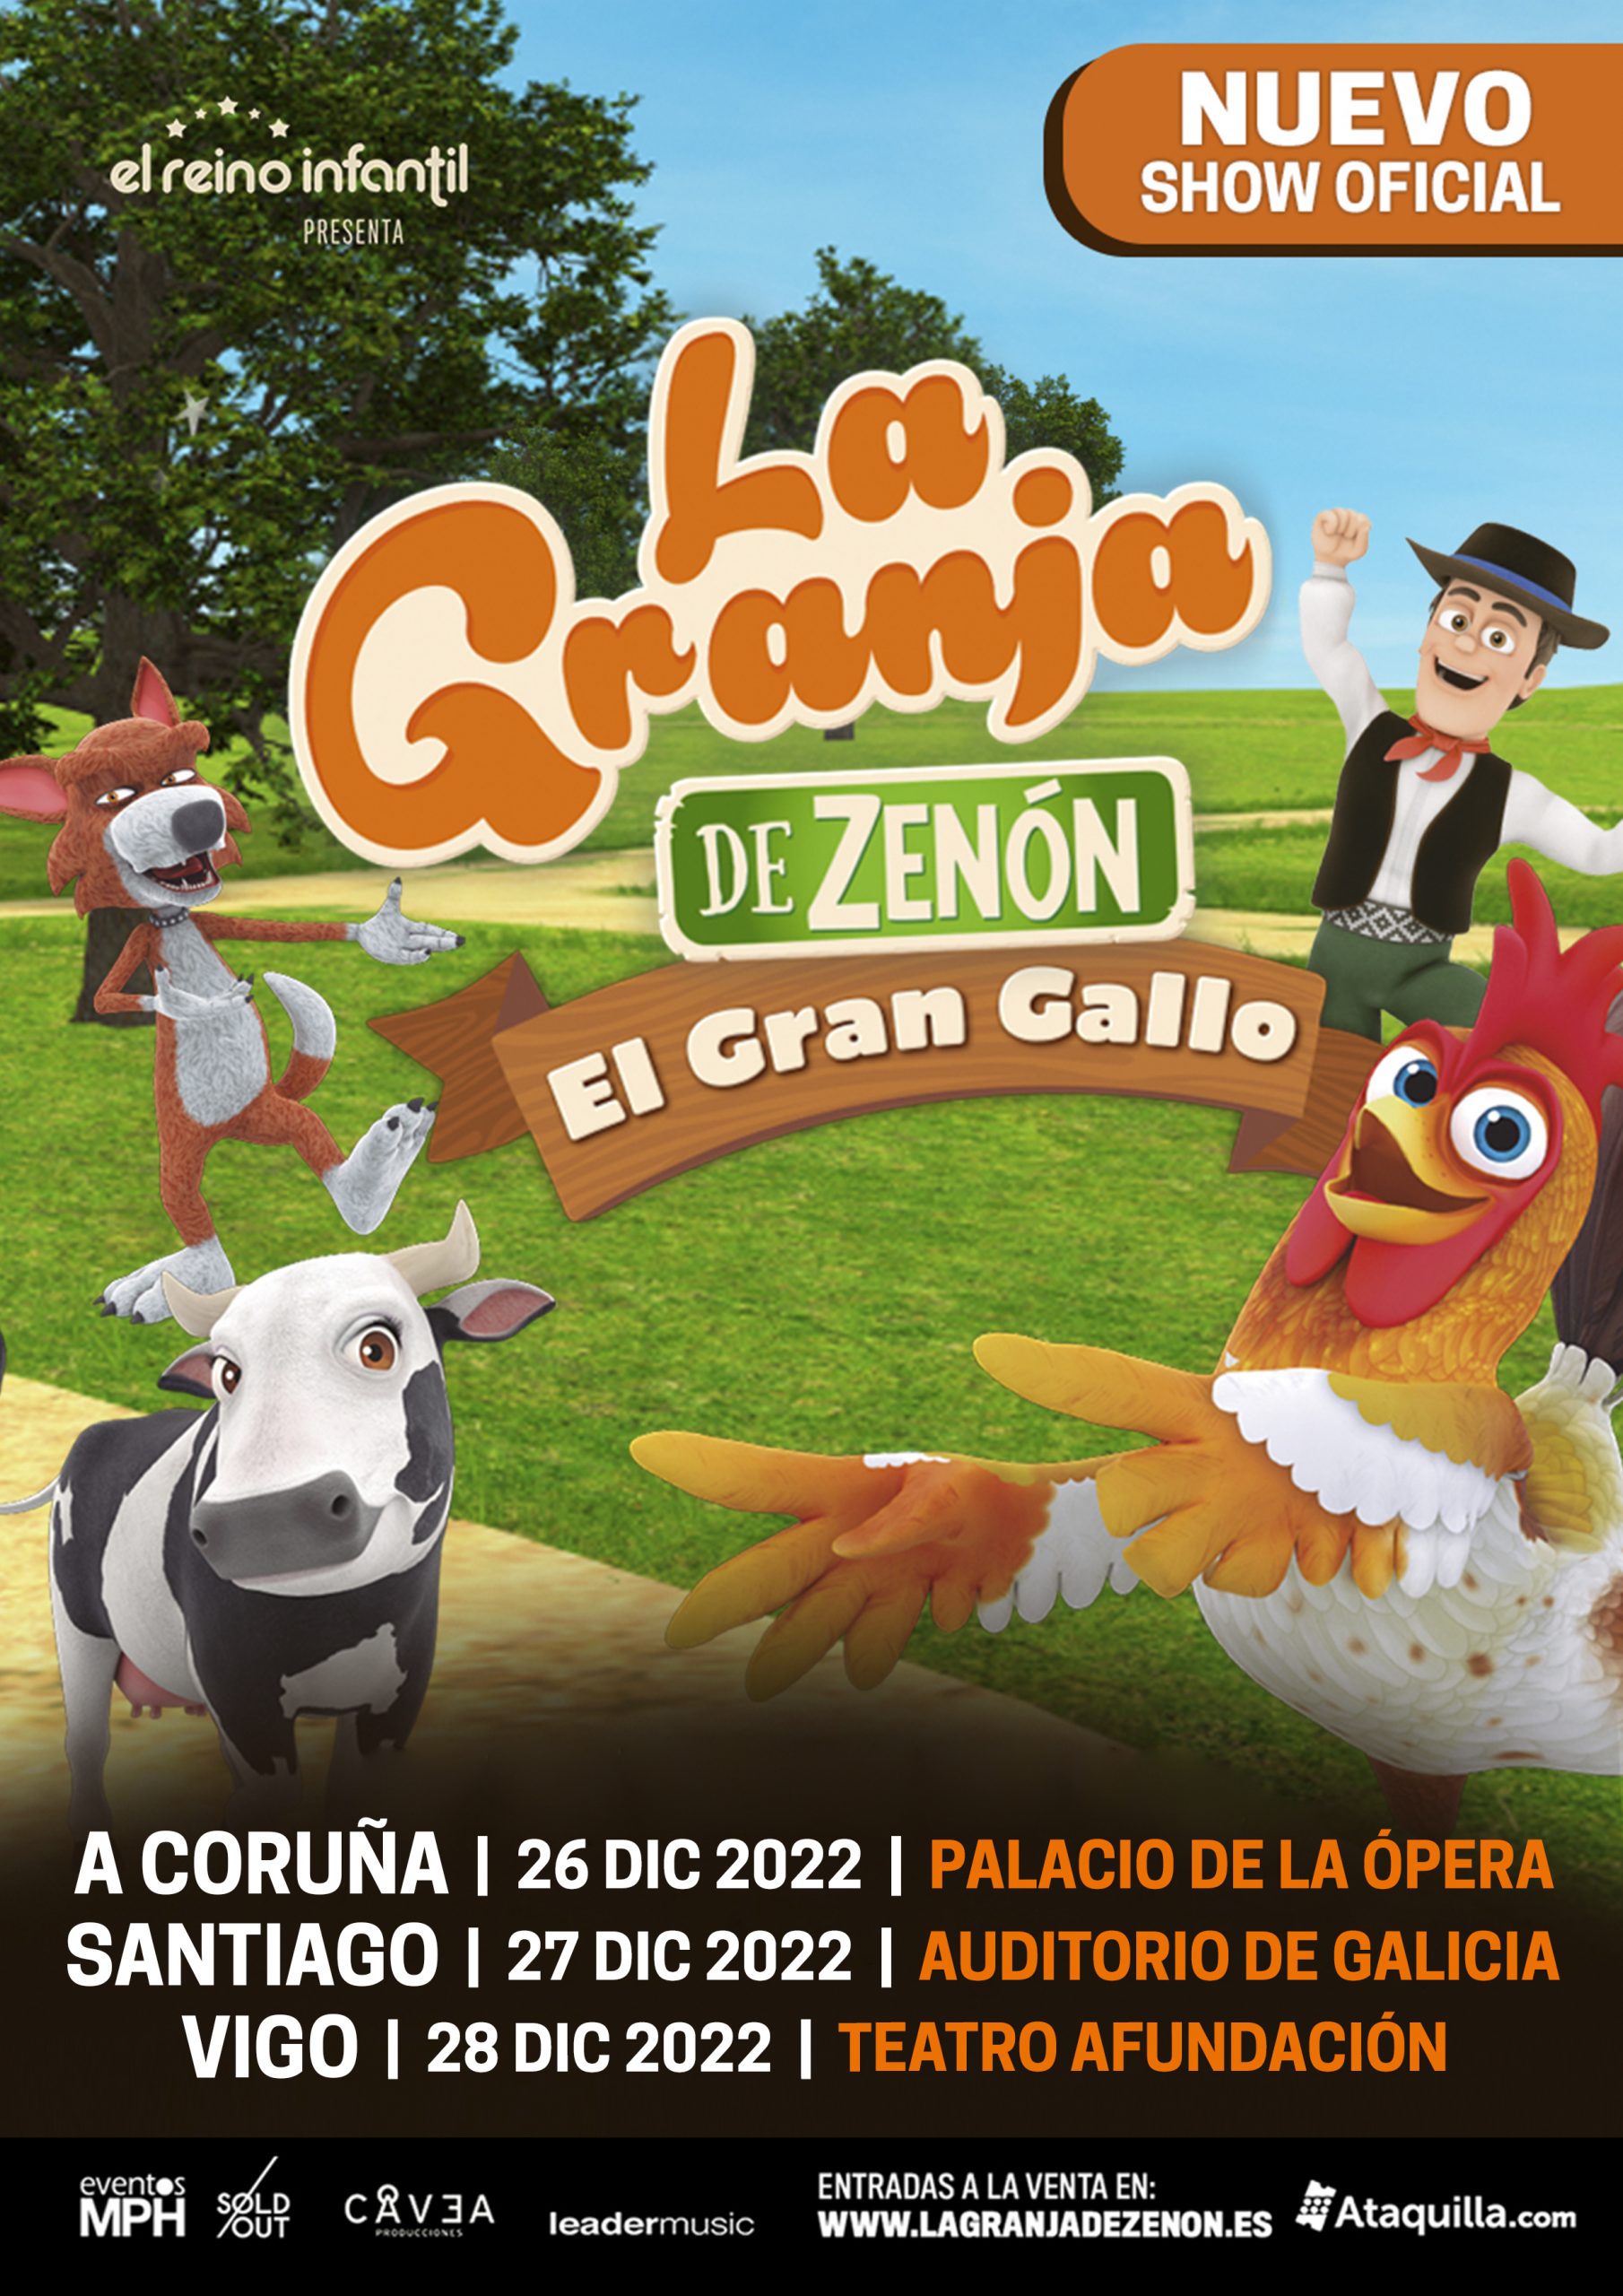 LA GRANJA DE ZENON “El Gran Gallo” | Sesión 19:00h - Palacio de la Ópera